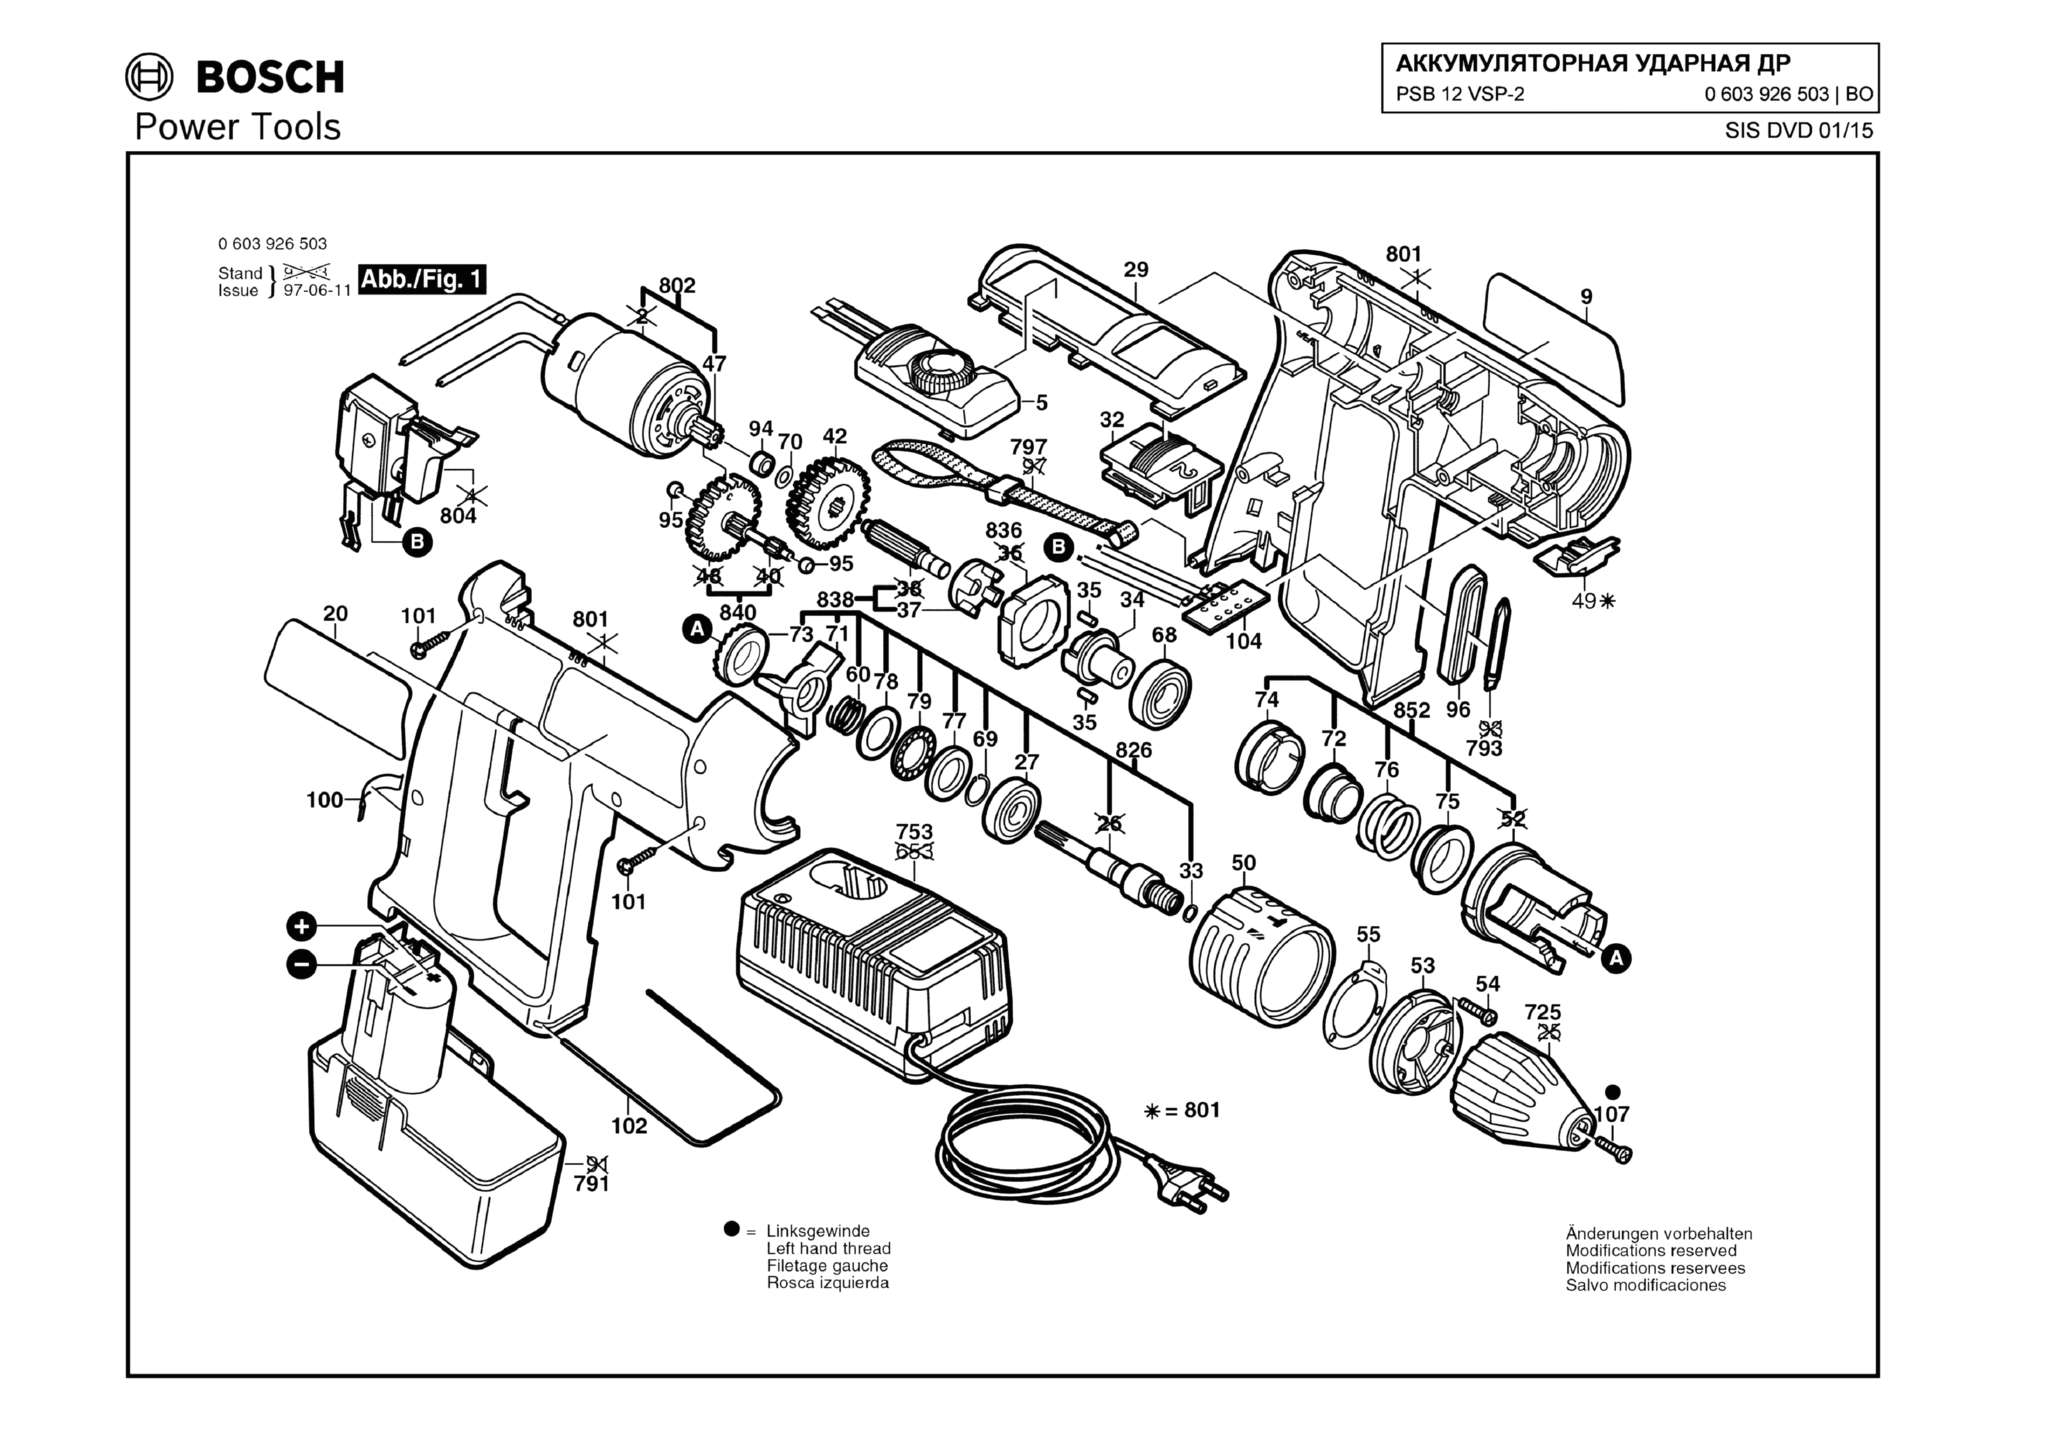 Запчасти, схема и деталировка Bosch PSB 12 VSP-2 (ТИП 0603926503)